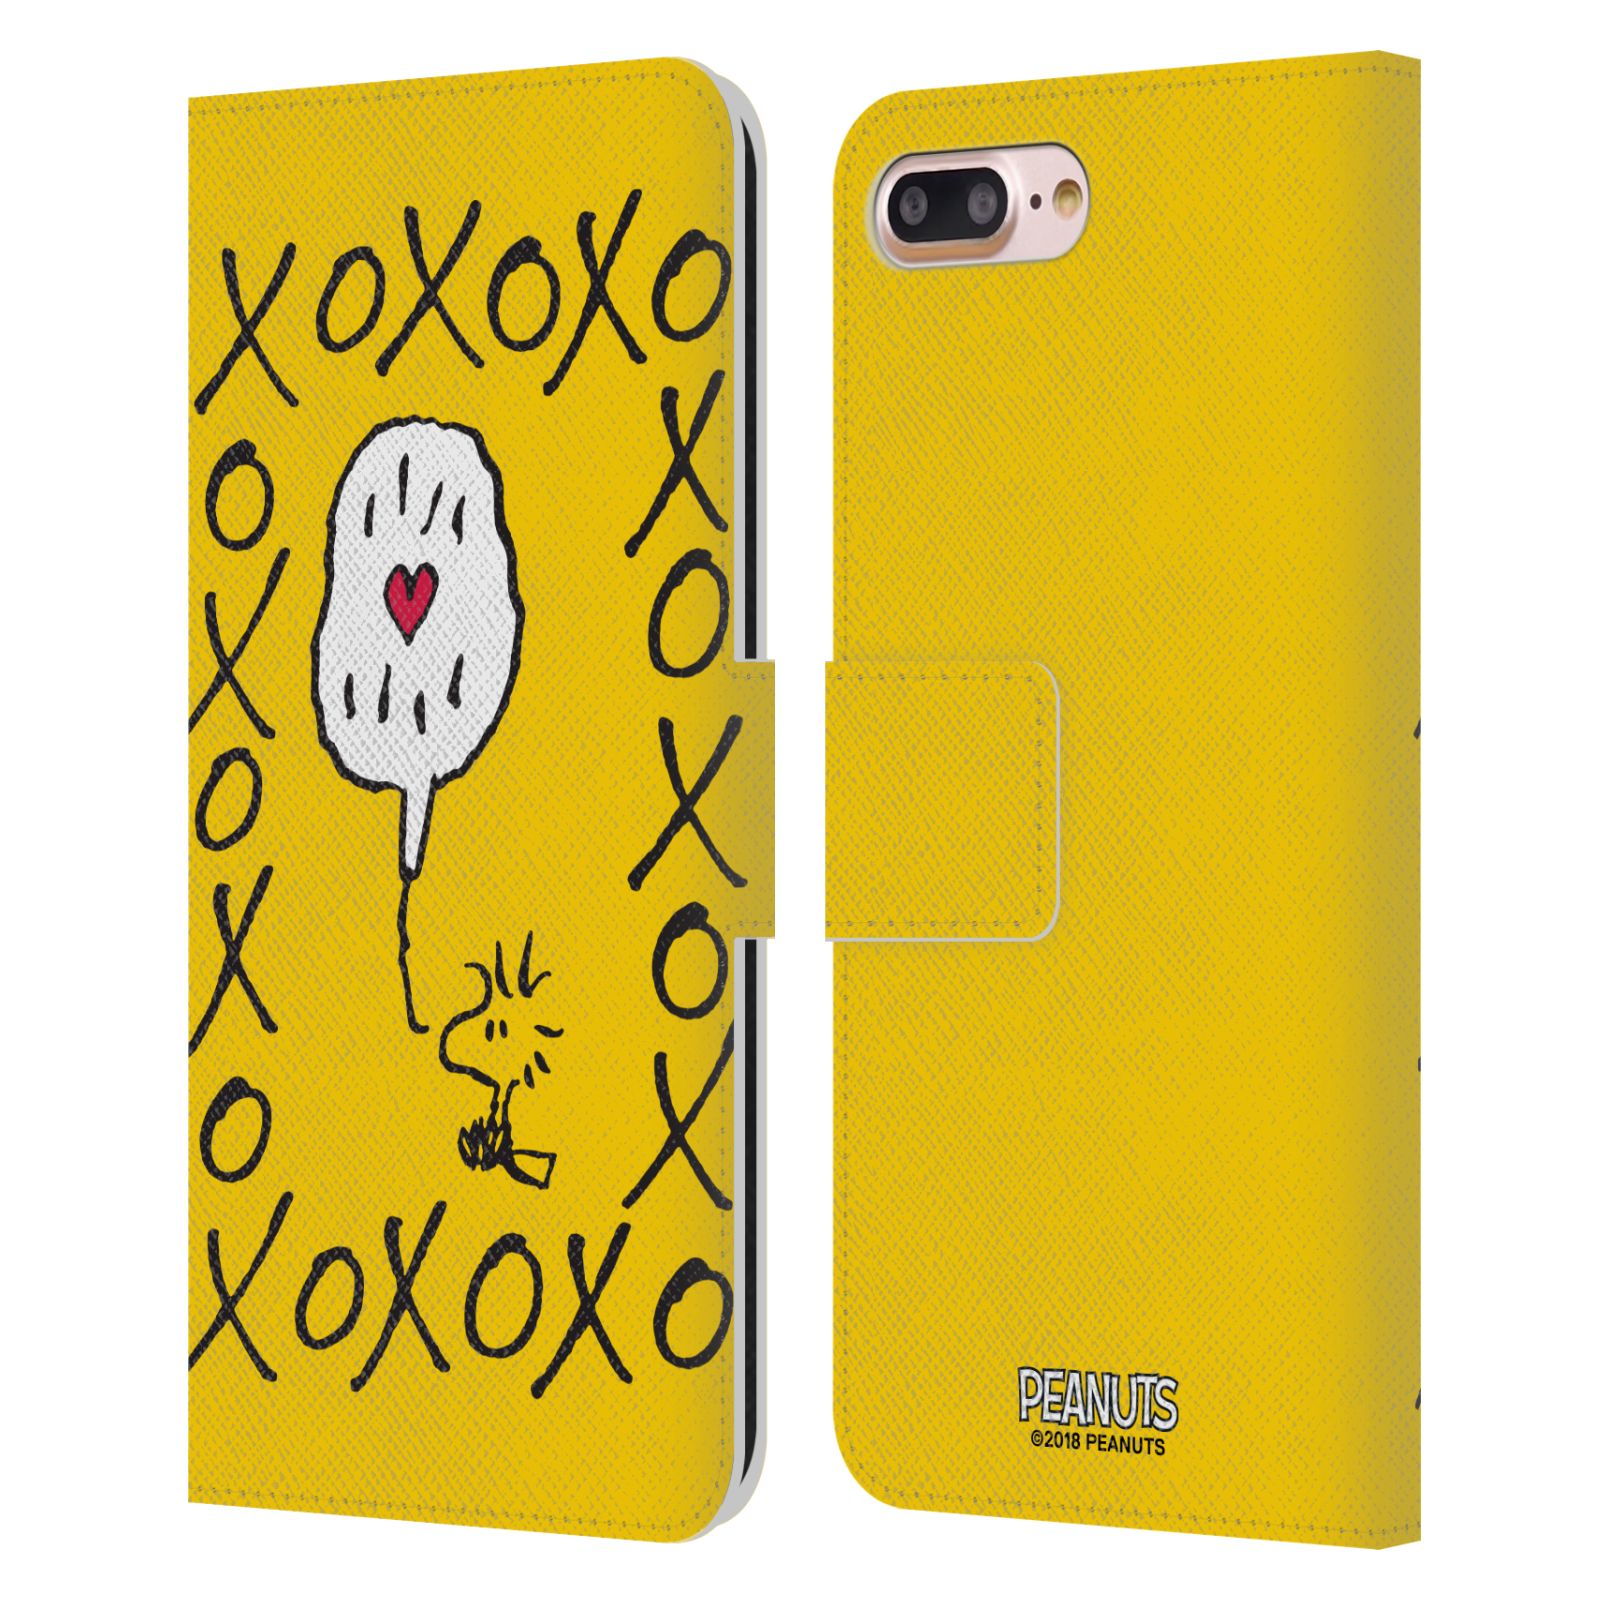 Pouzdro na mobil Apple Iphone 7 Plus / 8 Plus - Head Case - Peanuts - Woodstock ptáček XOXO